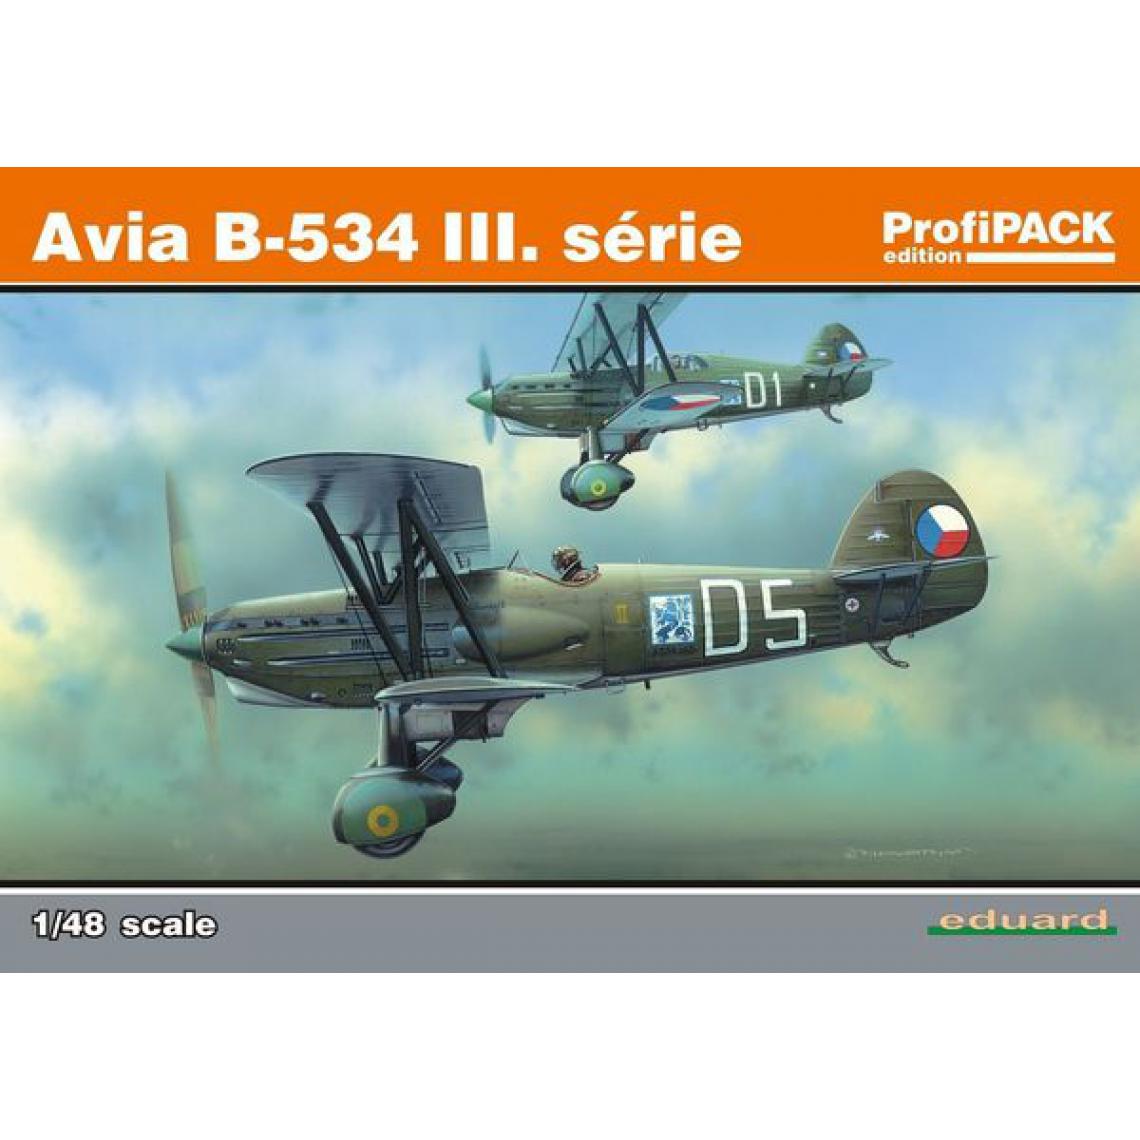 Eduard - Avia B-534 III serie(Reedition)Profipack - 1:48e - Eduard Plastic Kits - Accessoires et pièces